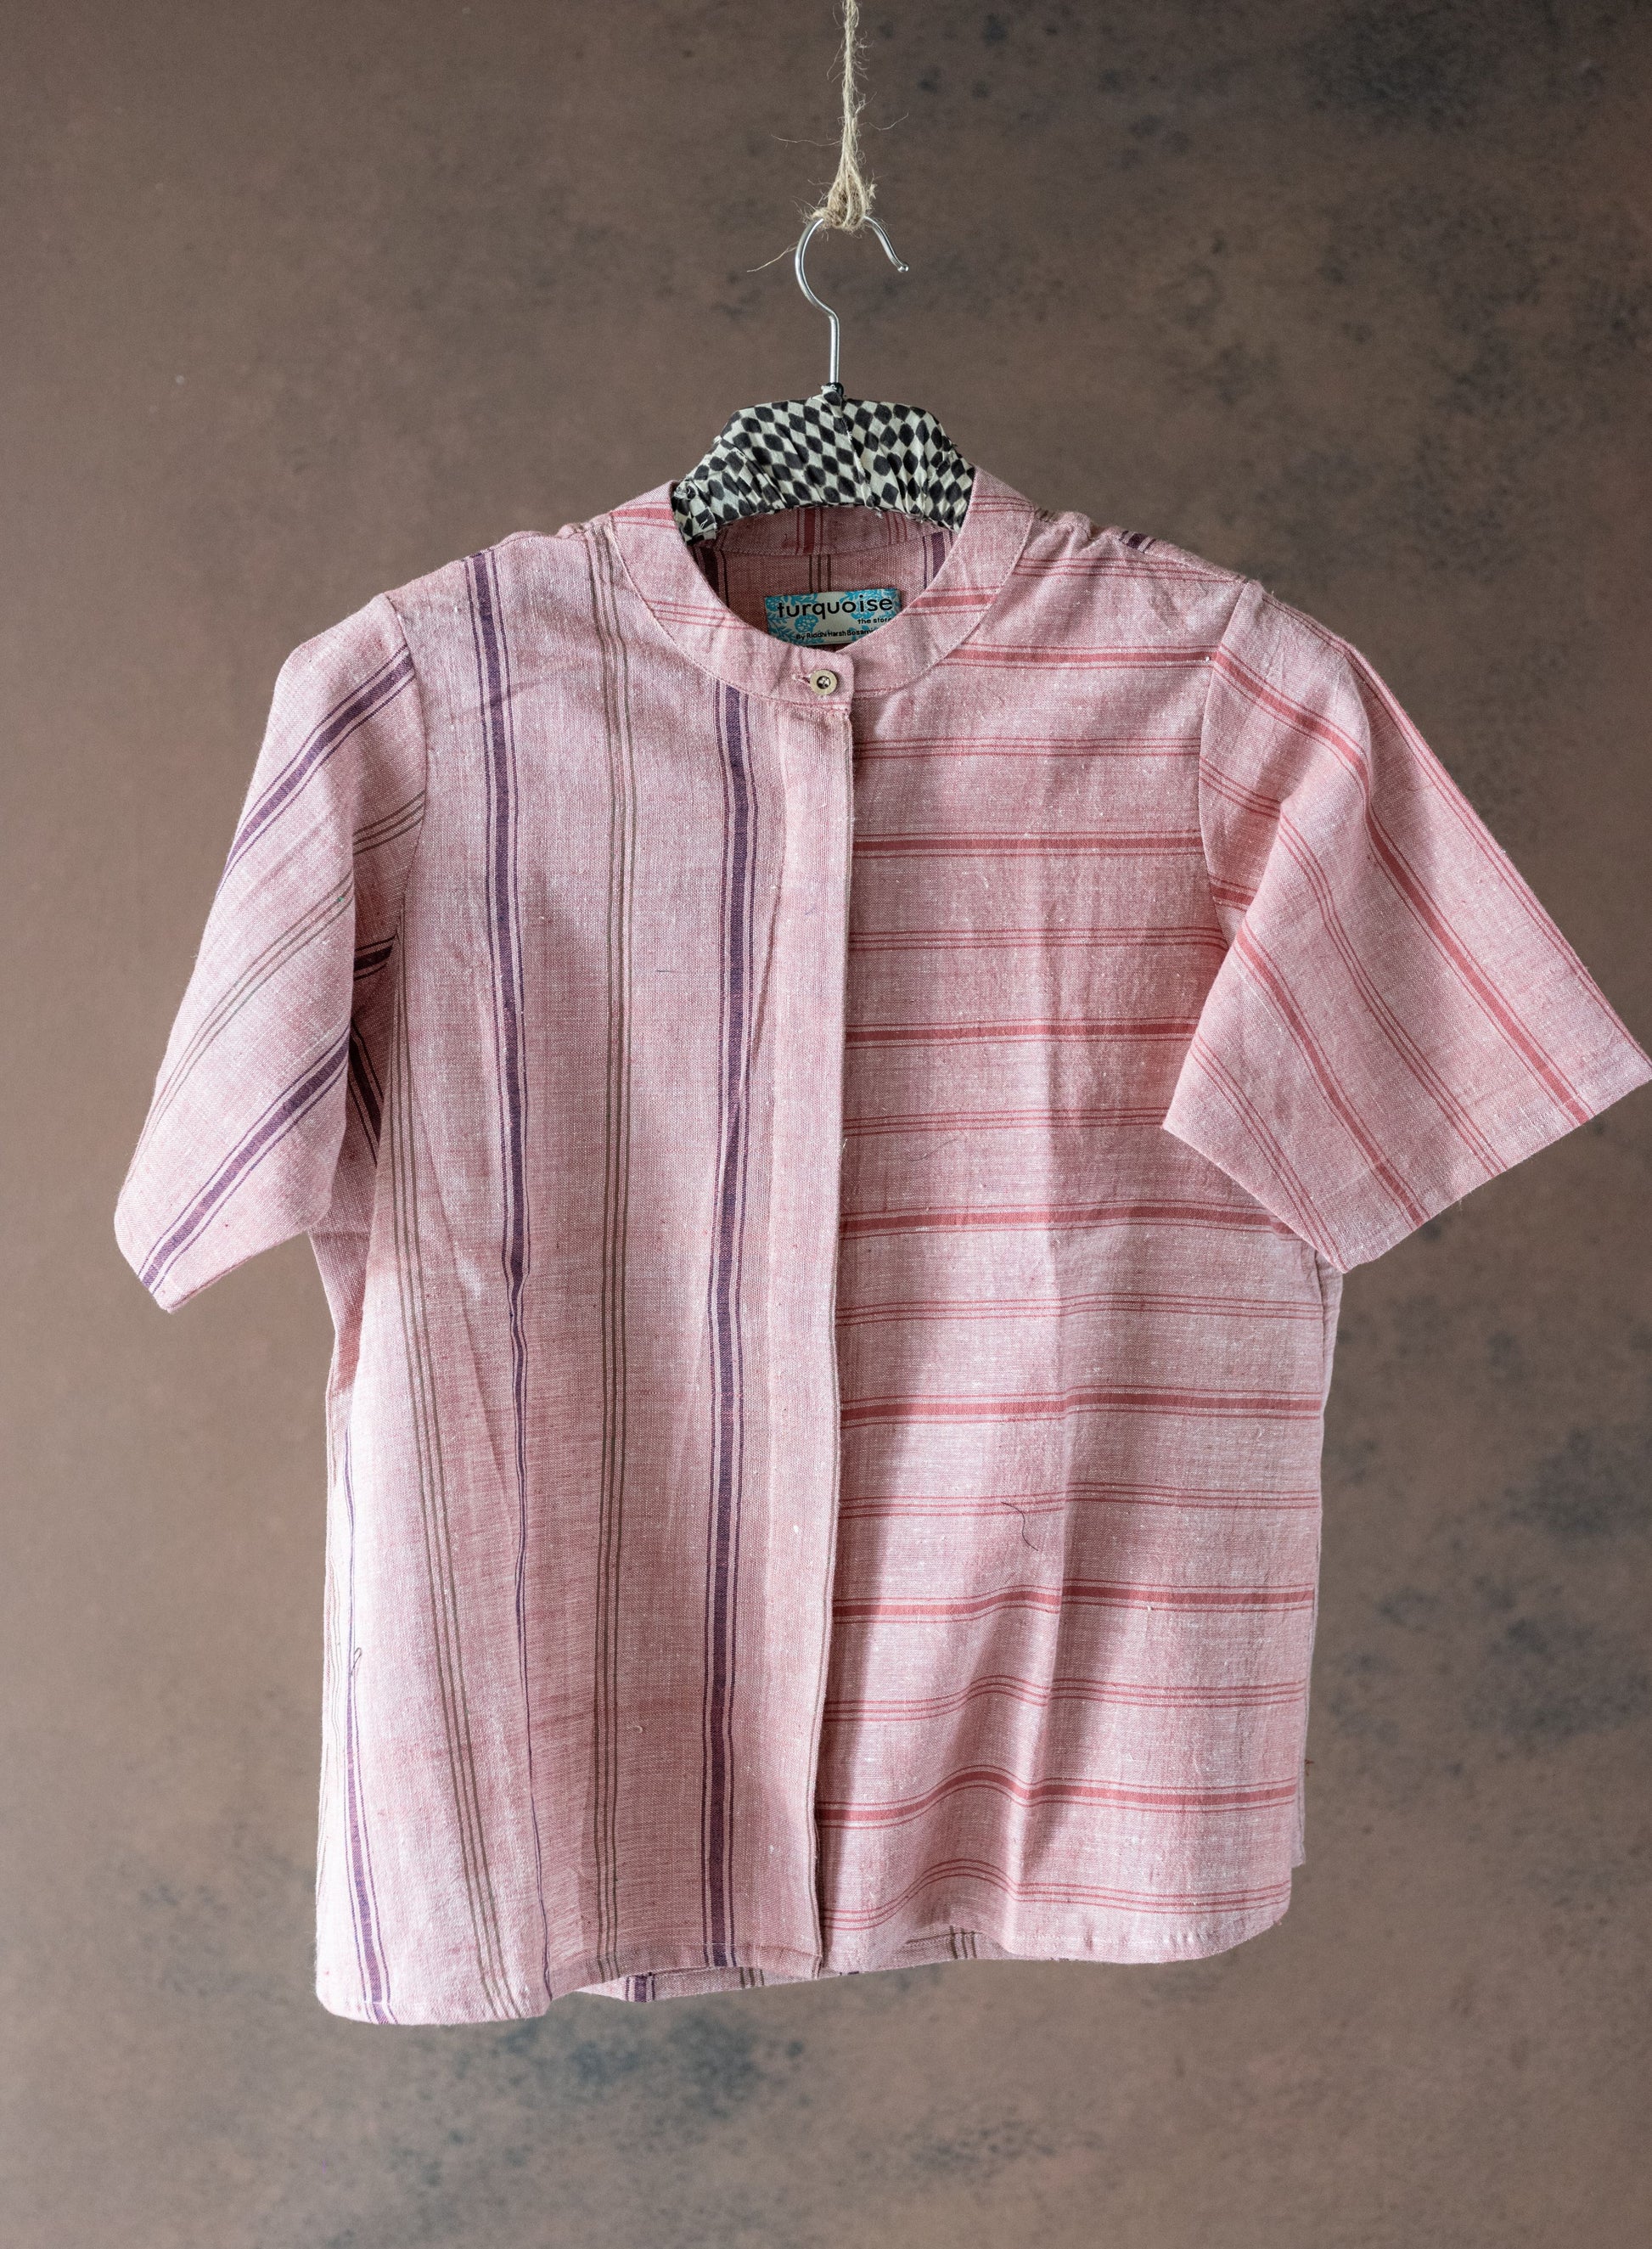 Stripes handwoven organic cotton shirt, Handmade shirt, Yarn dyed pure cotton shirt, Conscious fashion